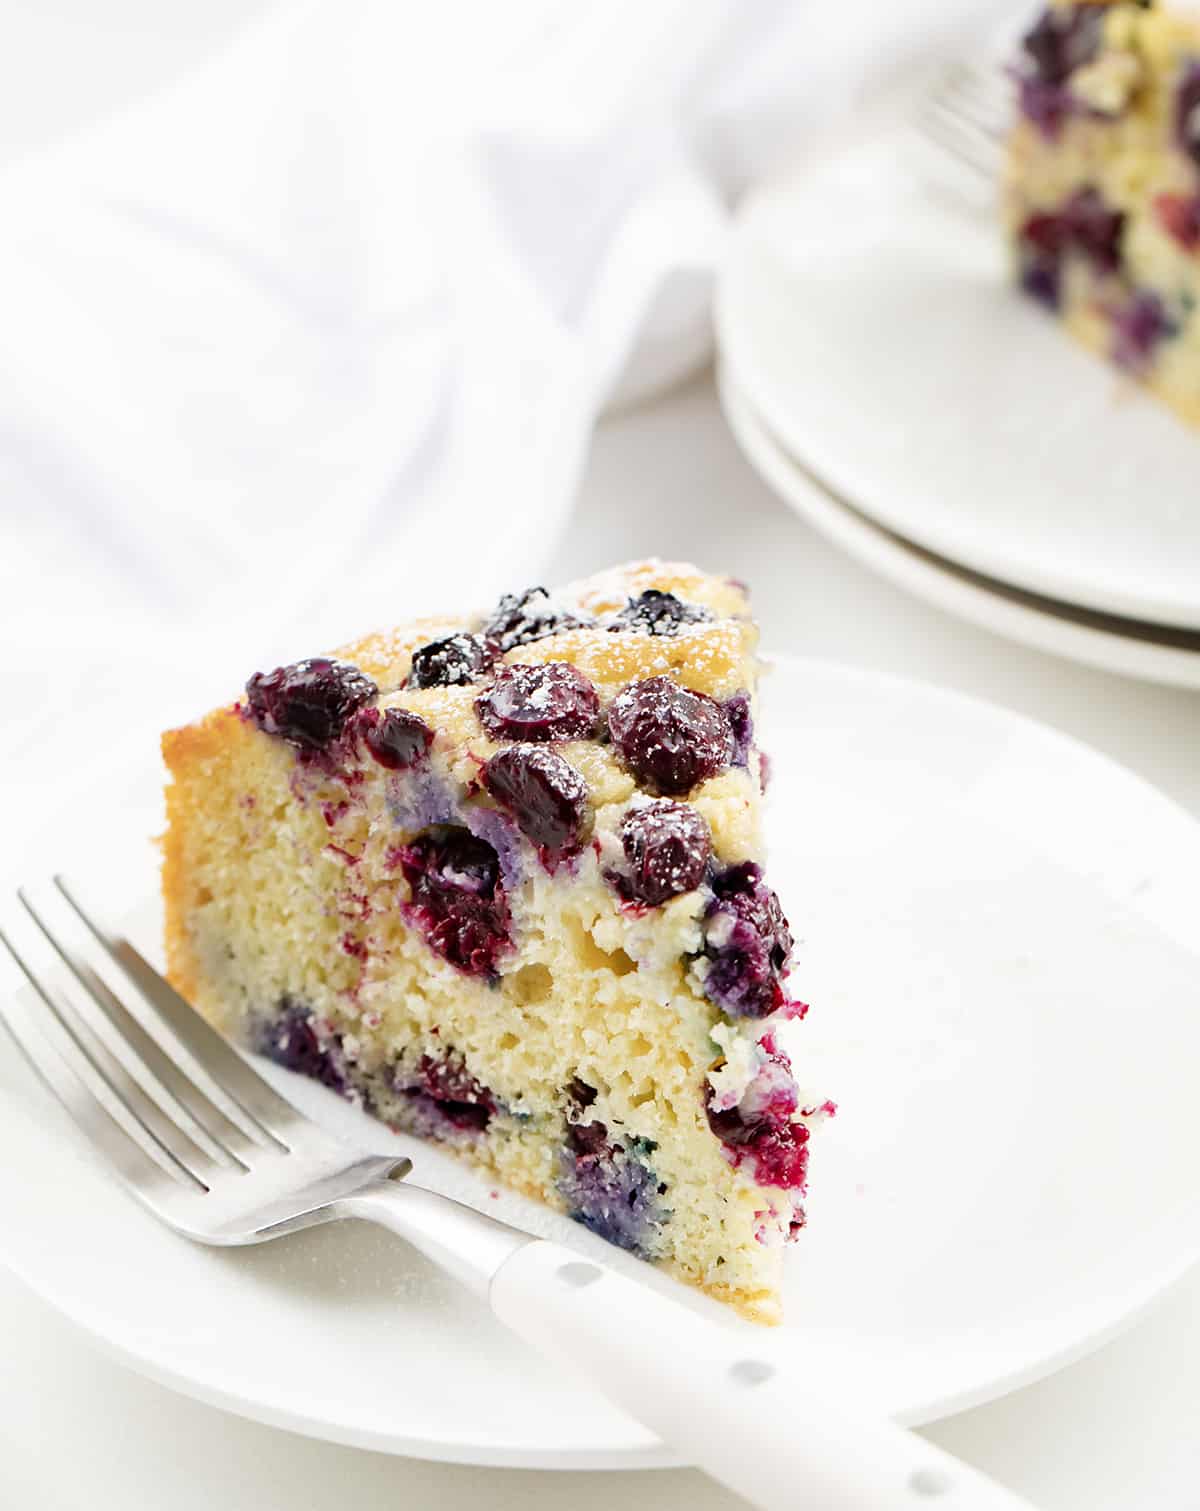 Slices of Blueberry Breakfast Cake on White Plates.